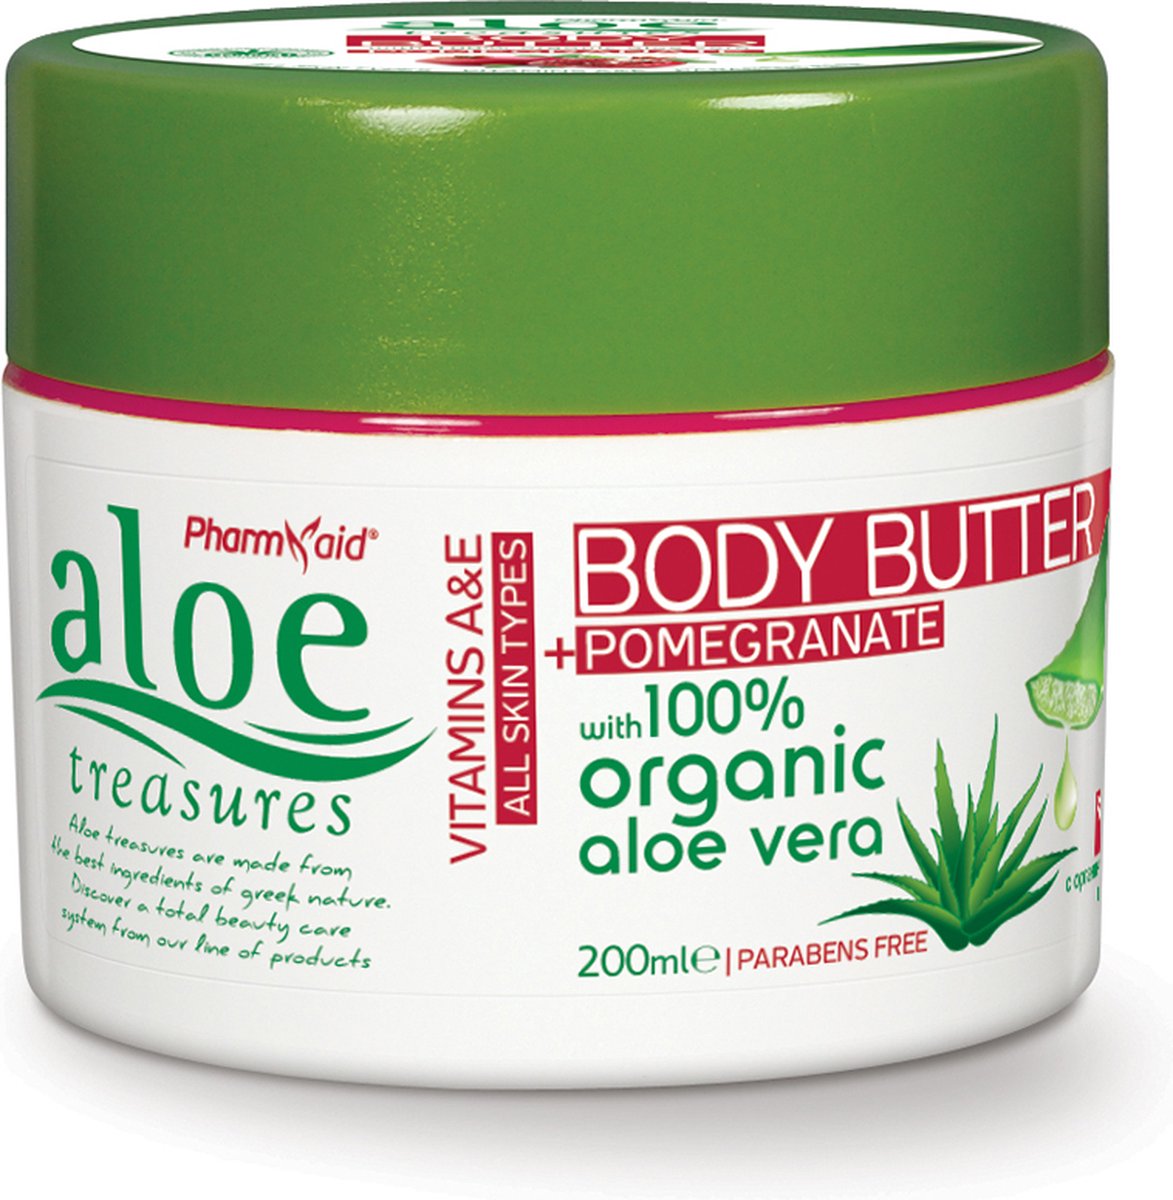 Pharmaid Aloe Treasures Body Butter Pomegranate 200ml | Moisturizer Bodybutters